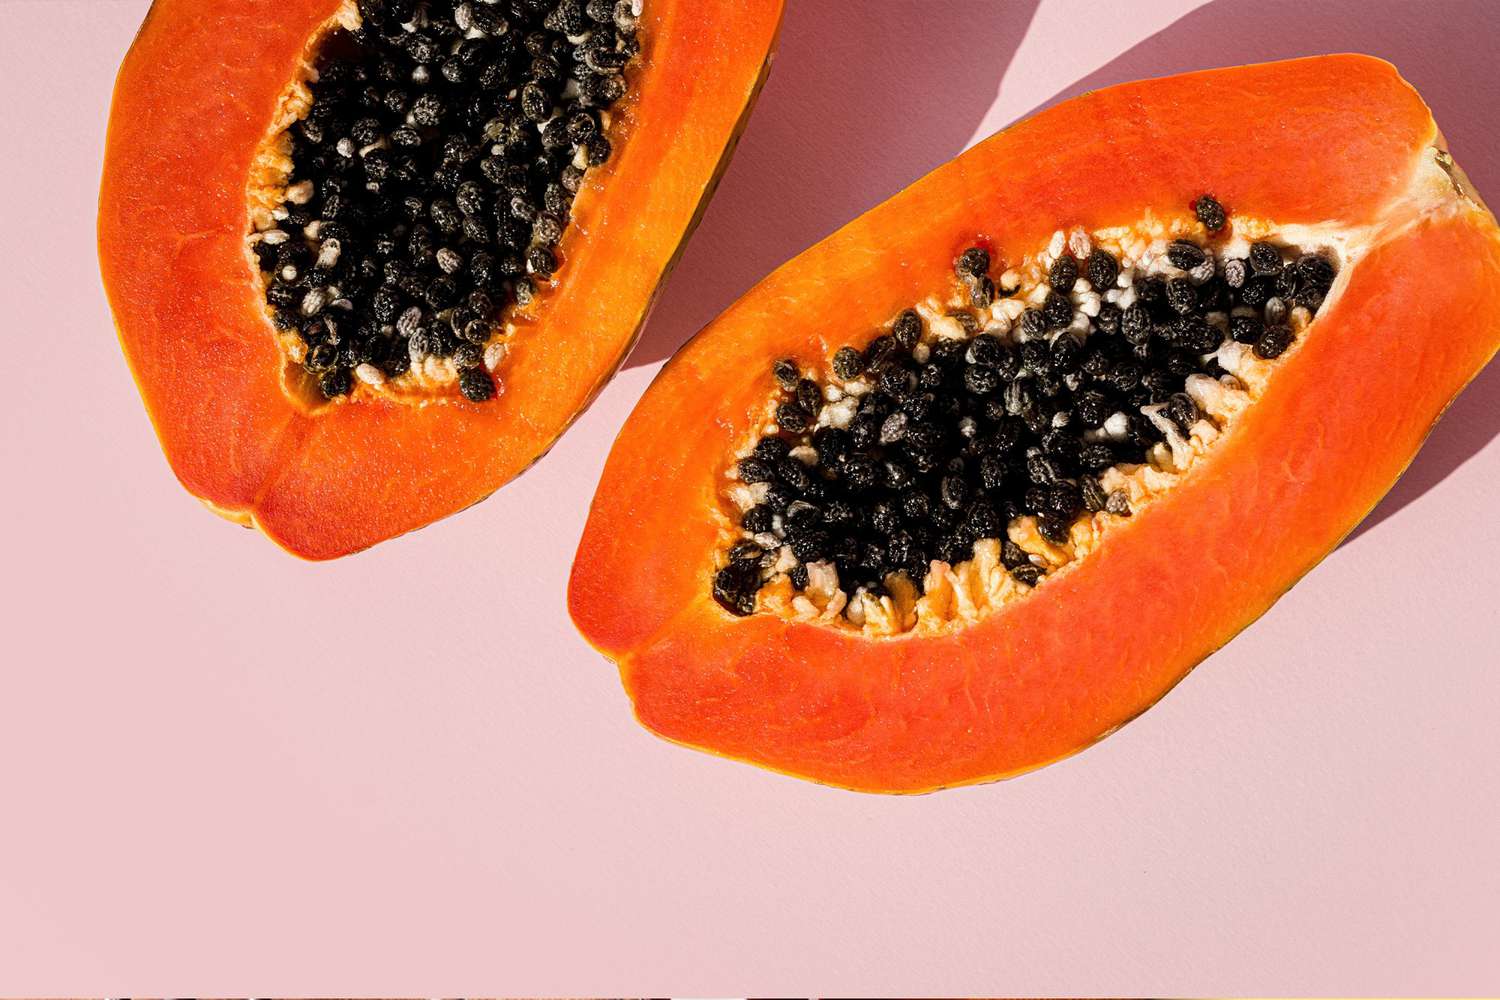 Papaya health benefits and nutrition: ripe papaya cross-section on a pink background